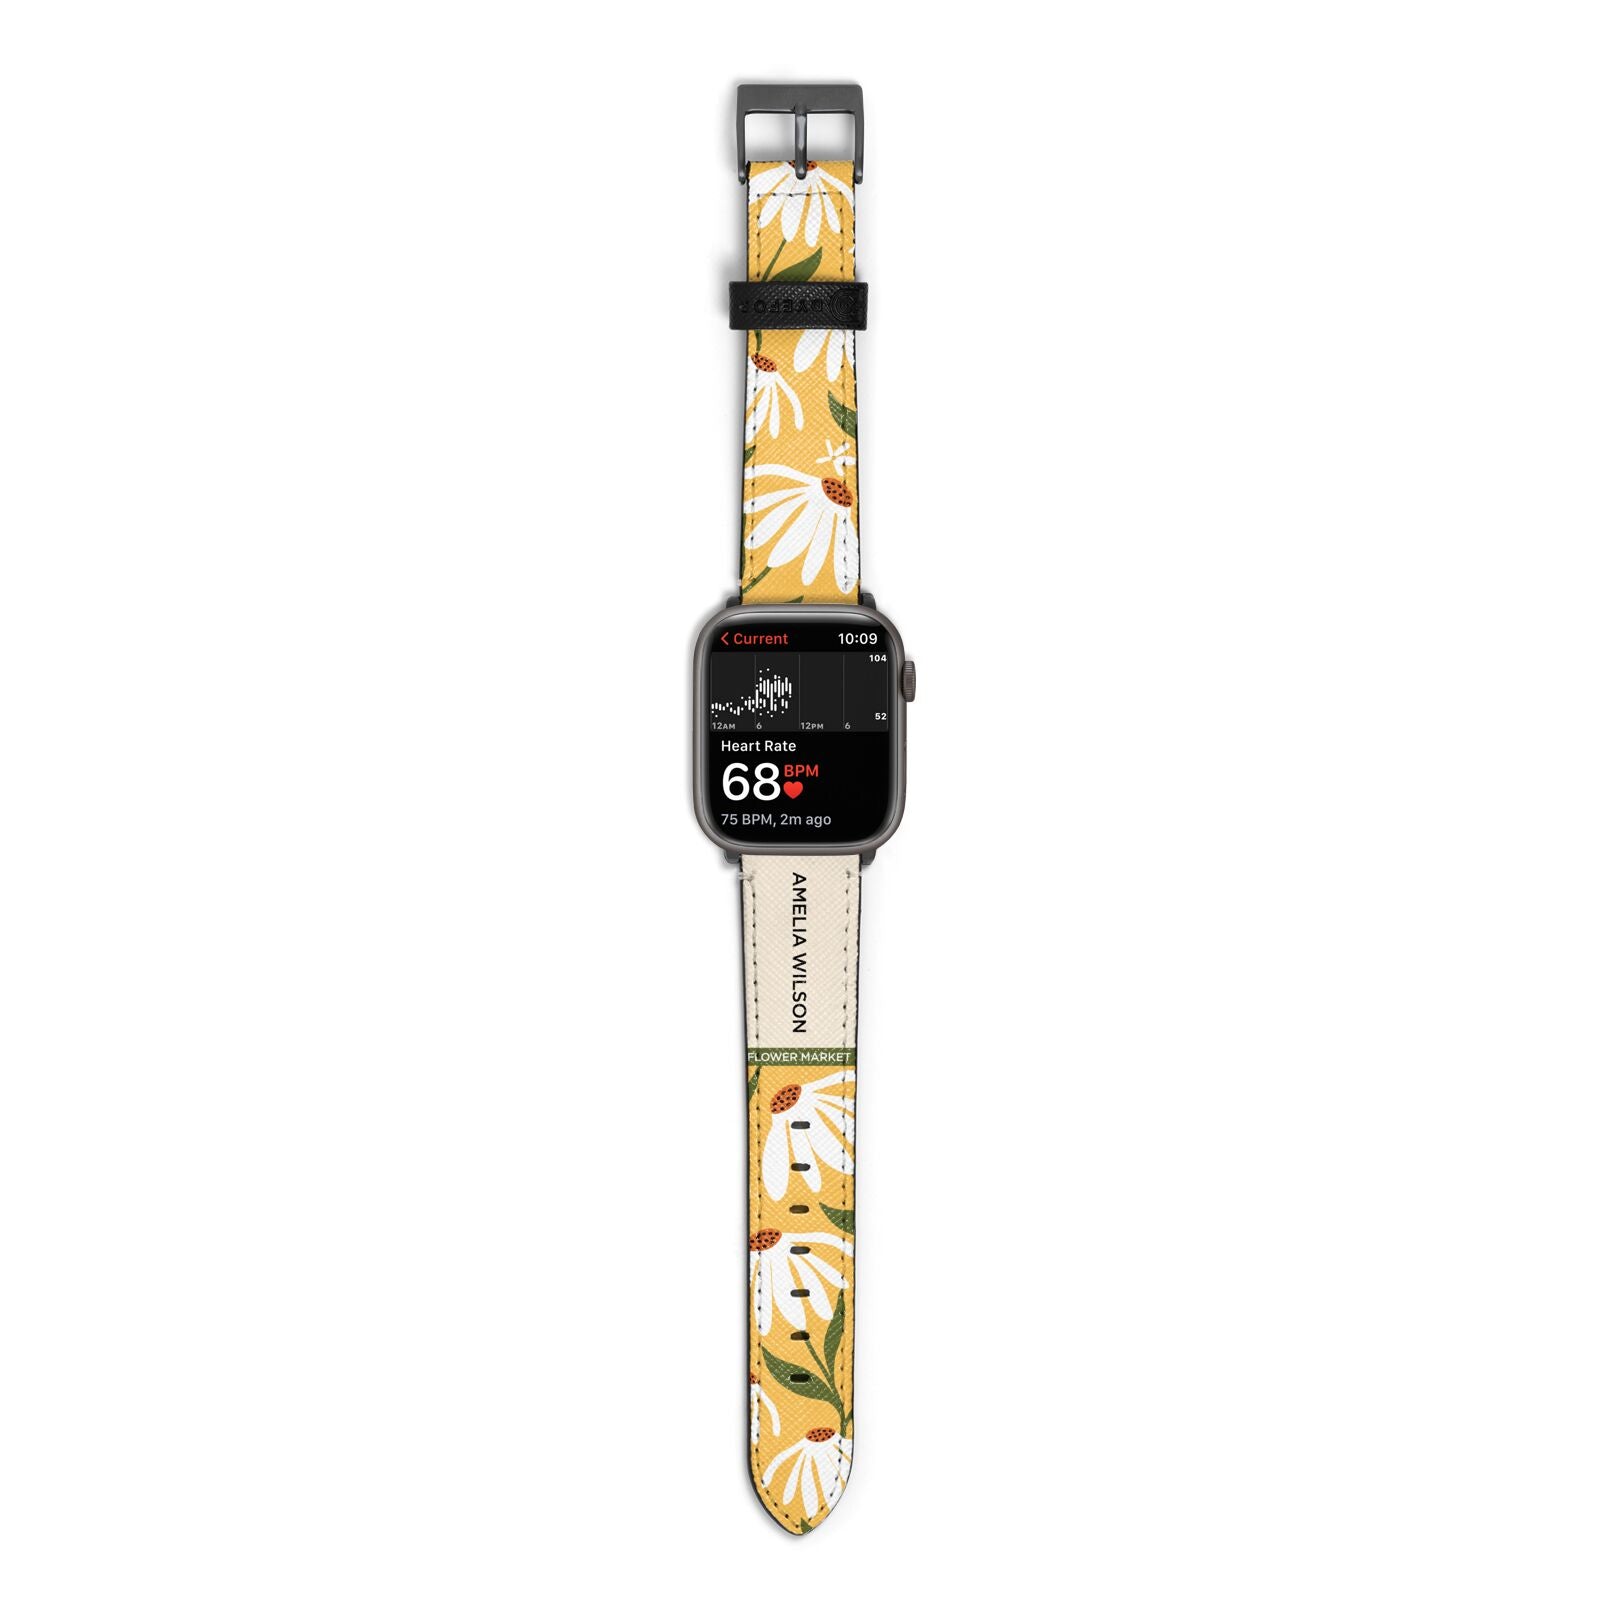 London Flower Market Apple Watch Strap Size 38mm with Space Grey Hardware